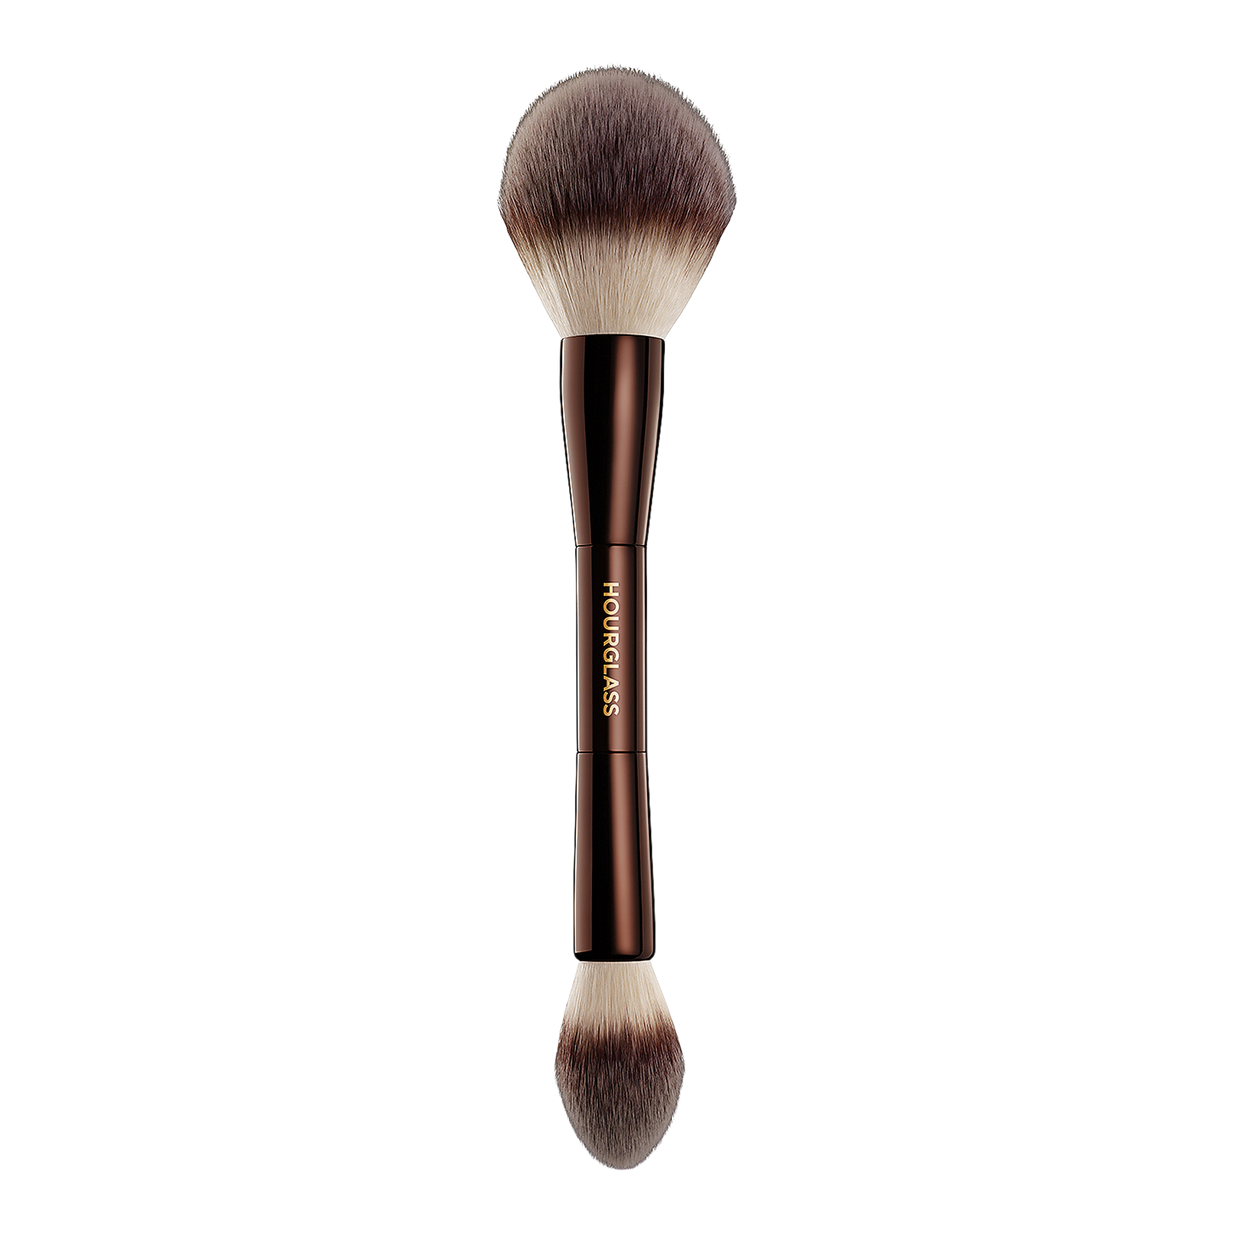 Hourglass Makeup Brushes Set - Luxury Powder Blush Eyeshadow